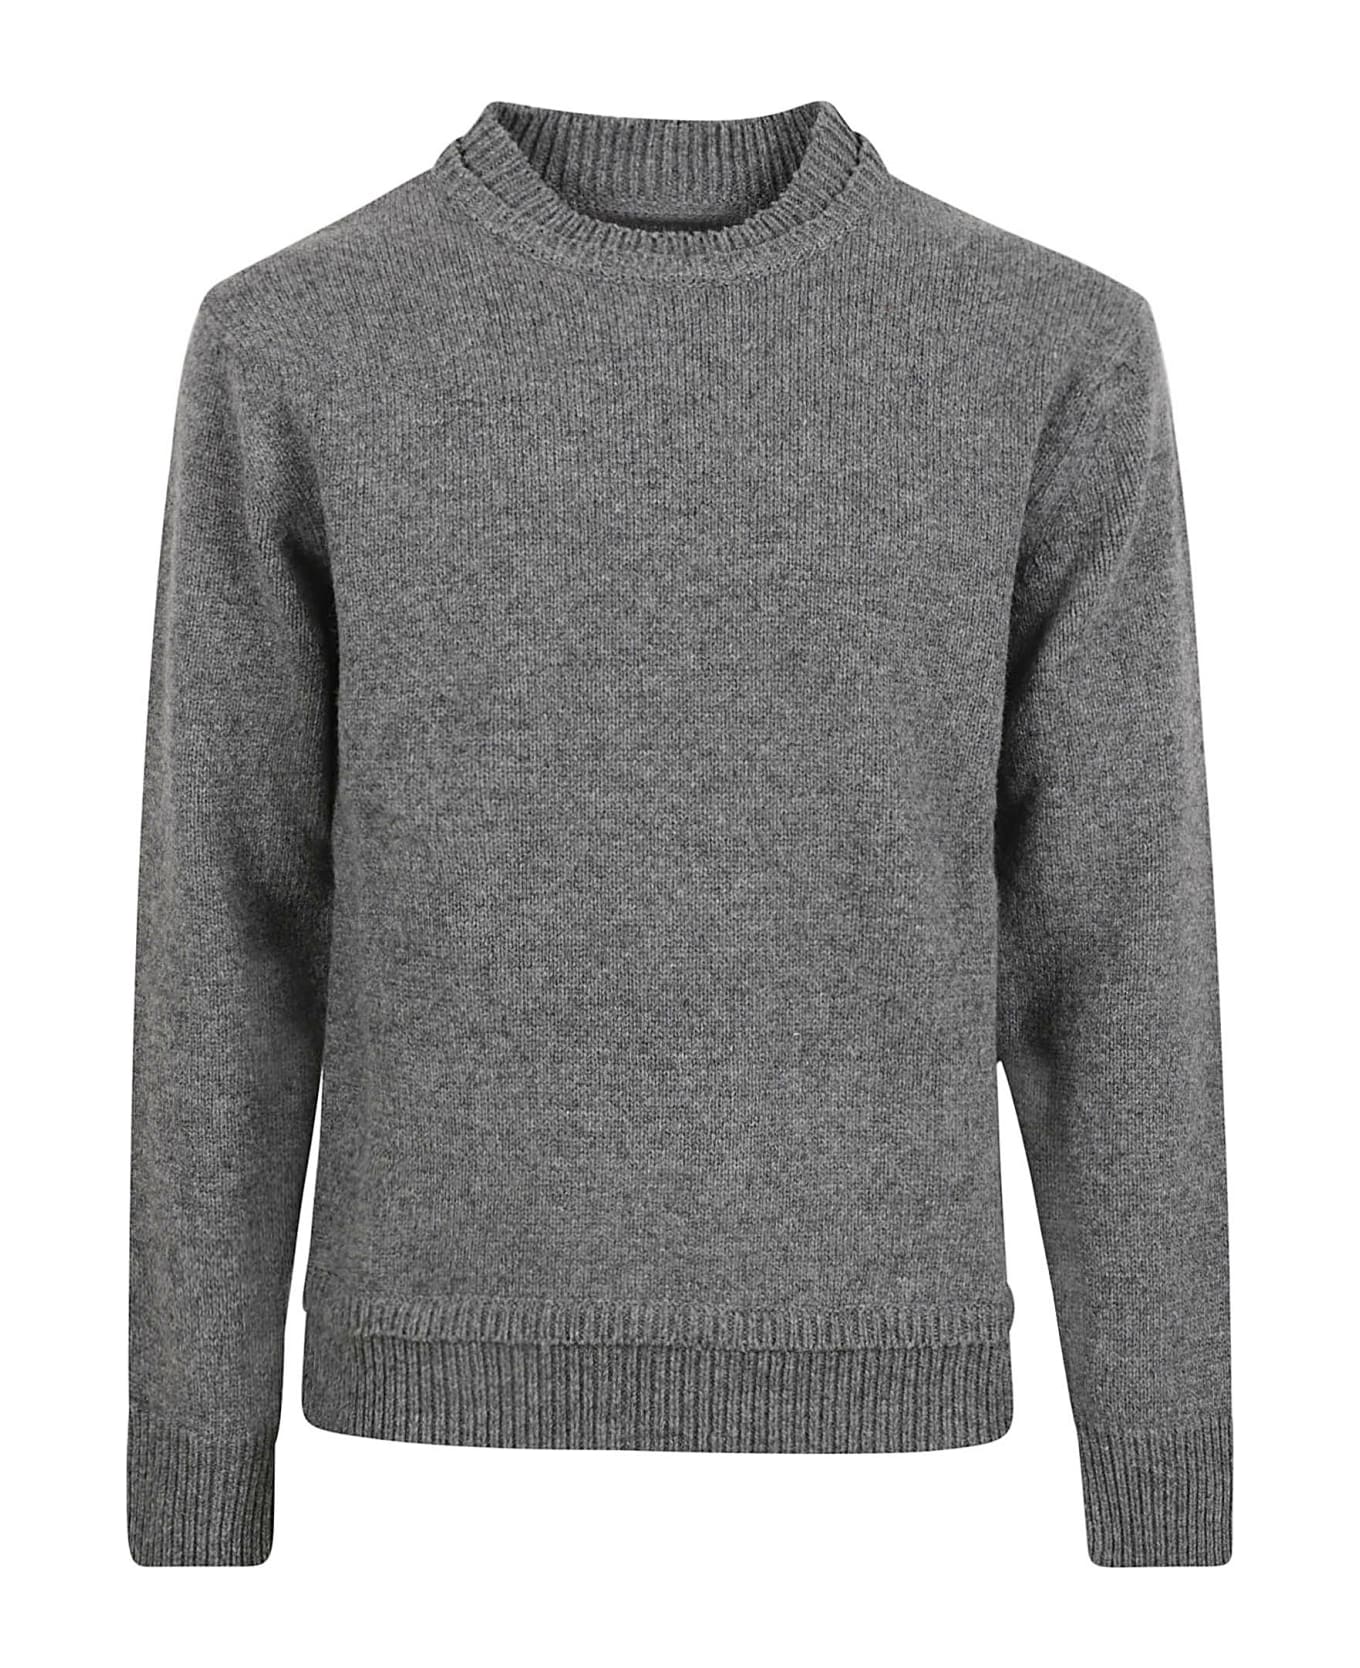 Maison Margiela Elbow Patch Sweater - MEDIUM GREY